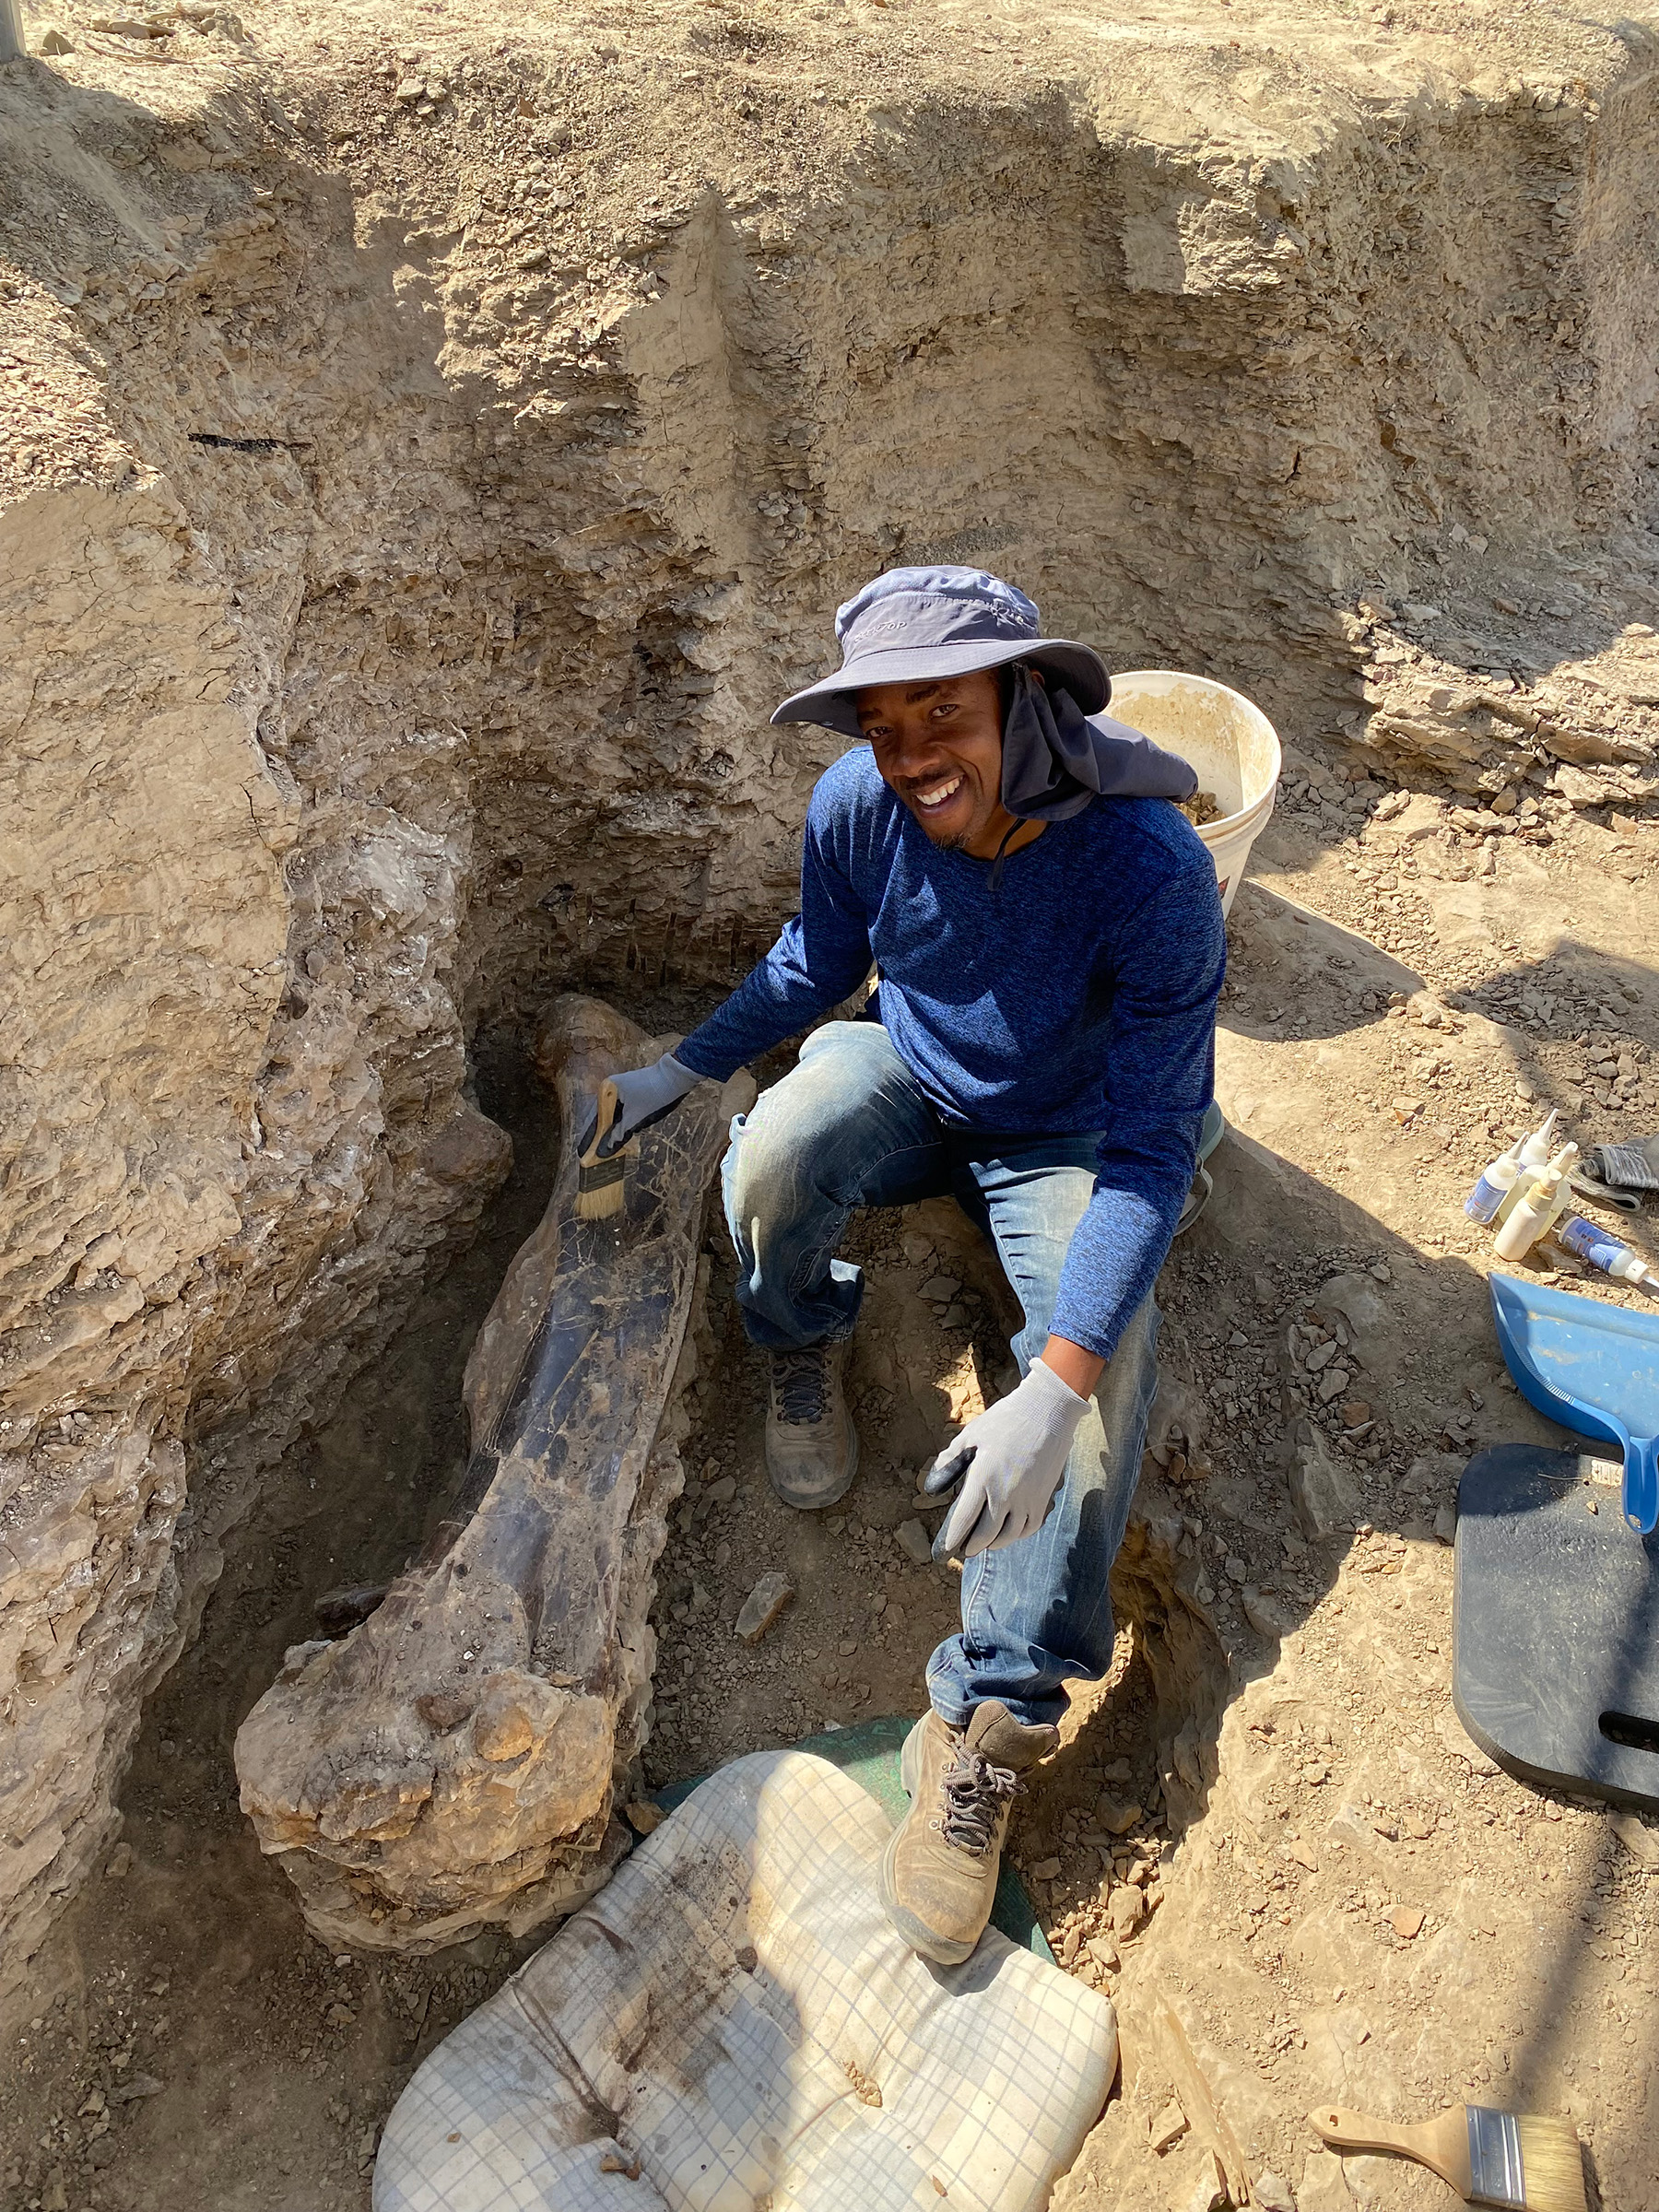 Smiling Black man at an excavation site